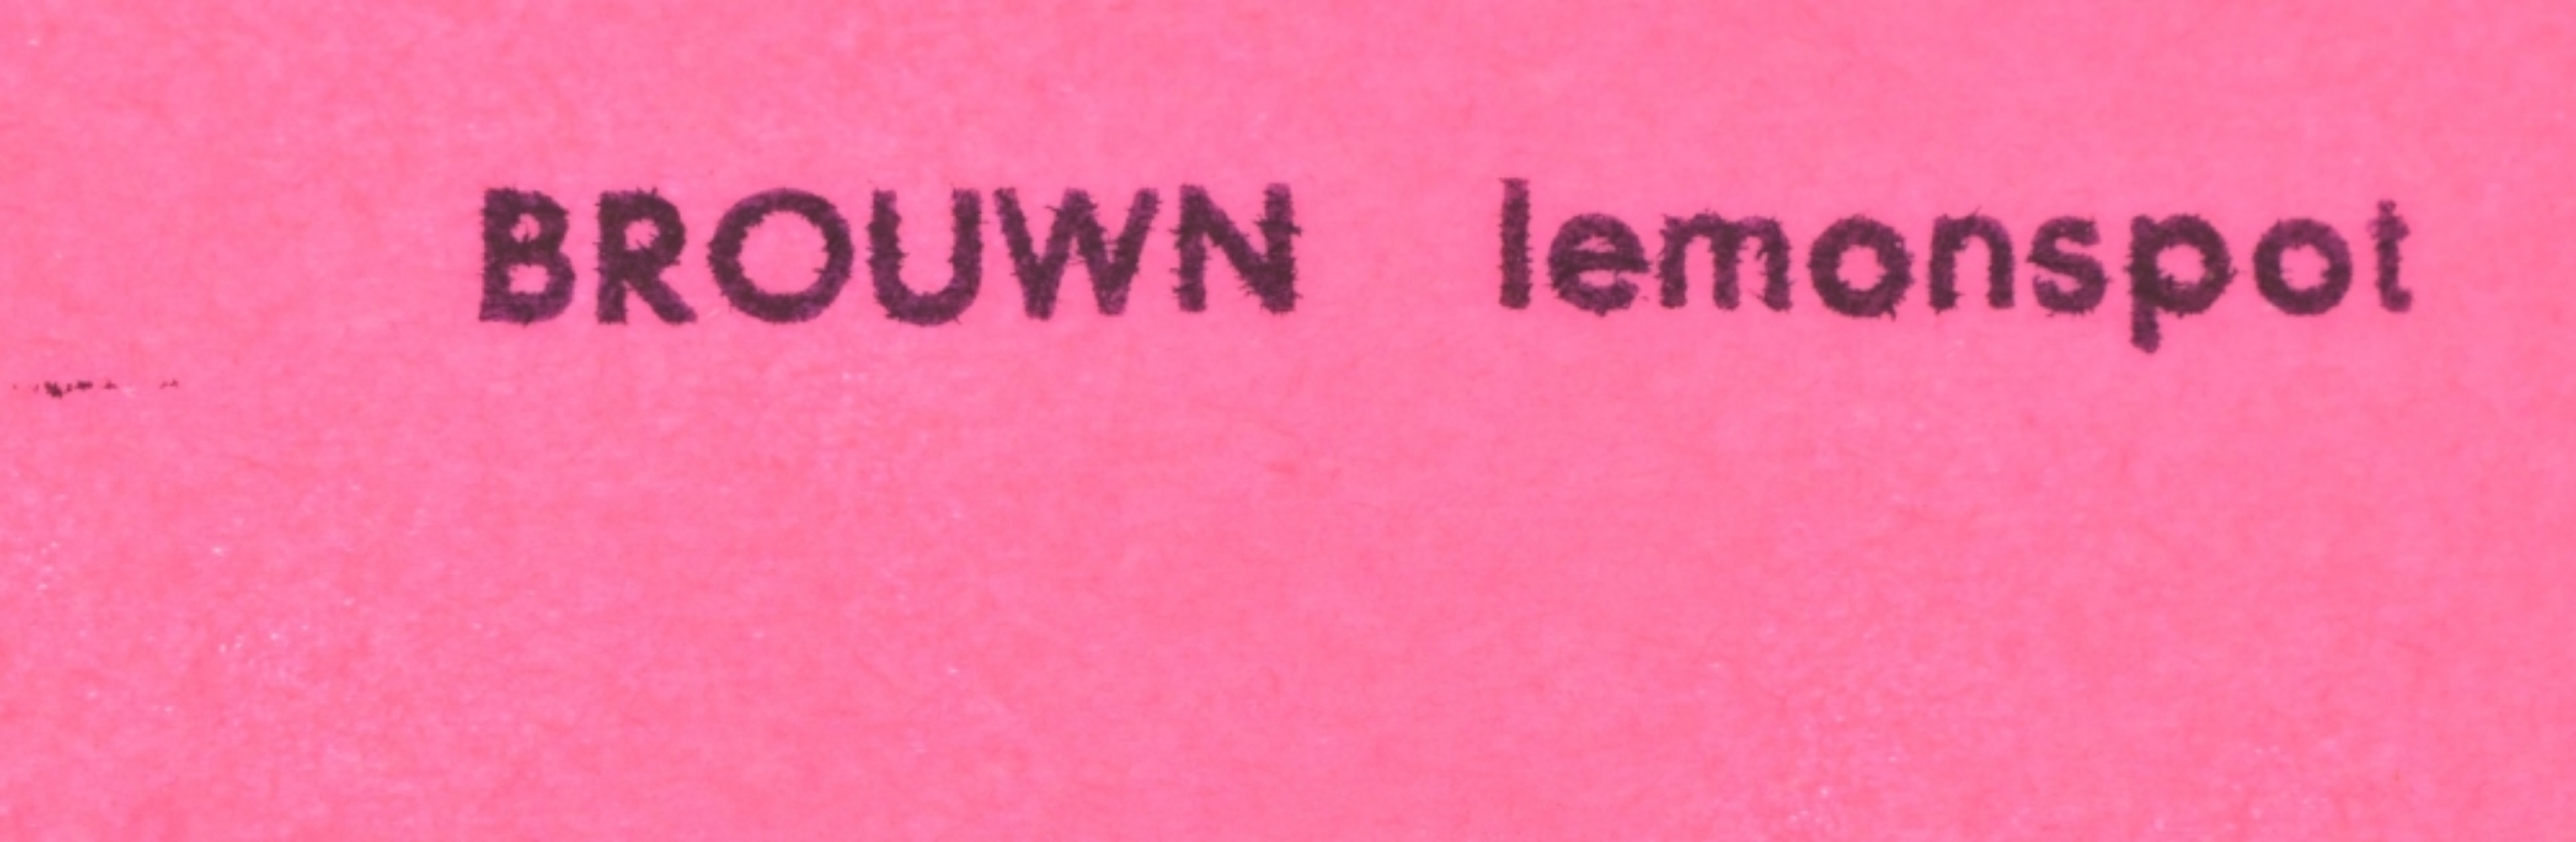 Stanley Brouwn, BROUWN Lemonspot, 1963 - Image 4 of 6